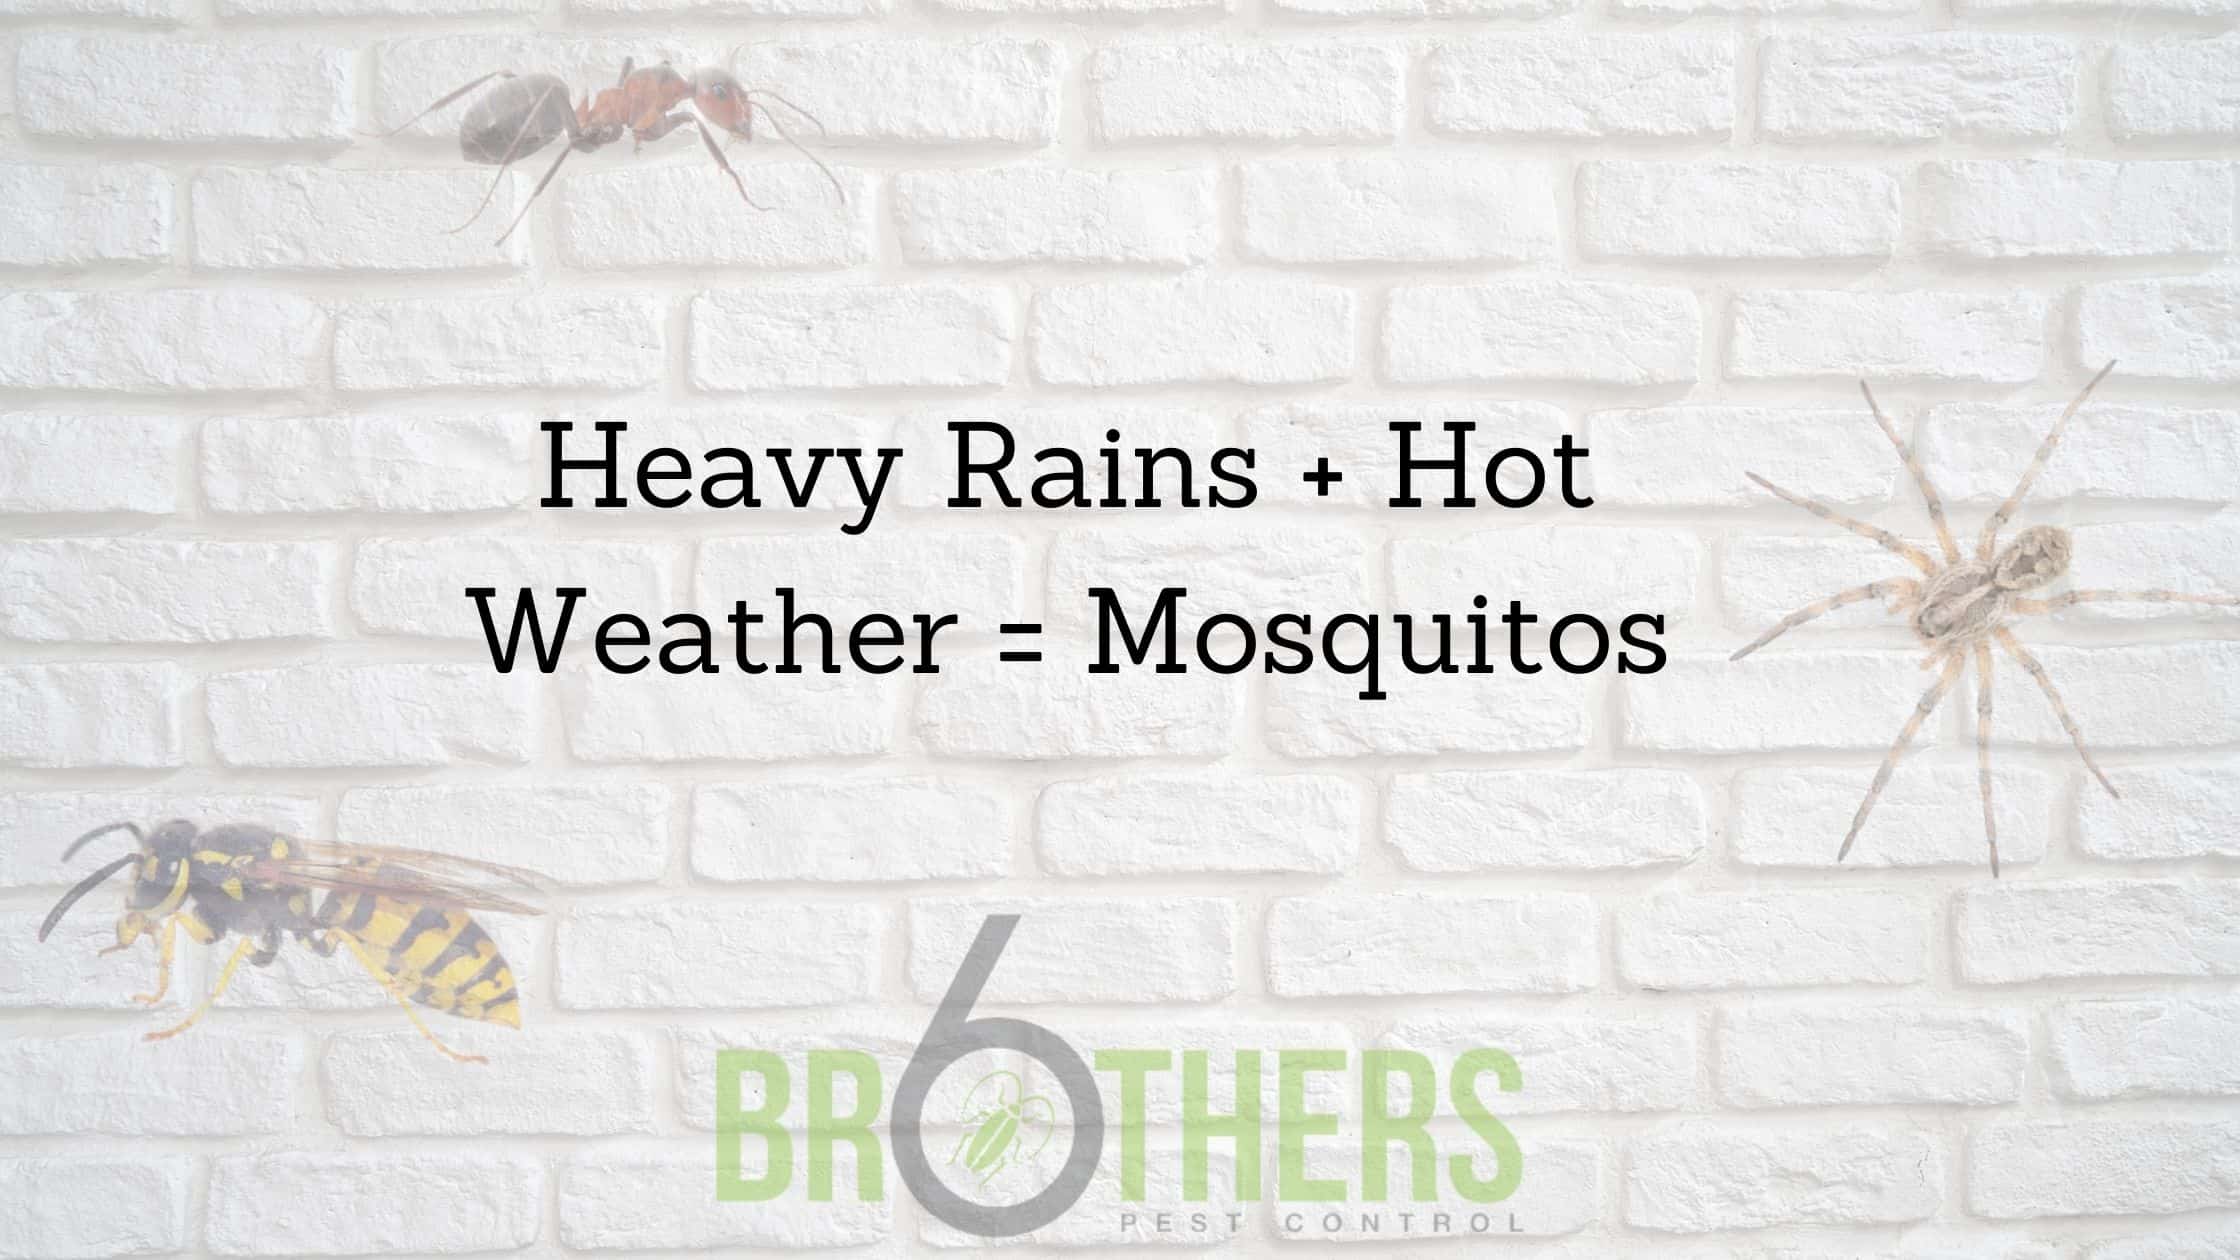 Heavy Rains + Hot Weather = Mosquitos